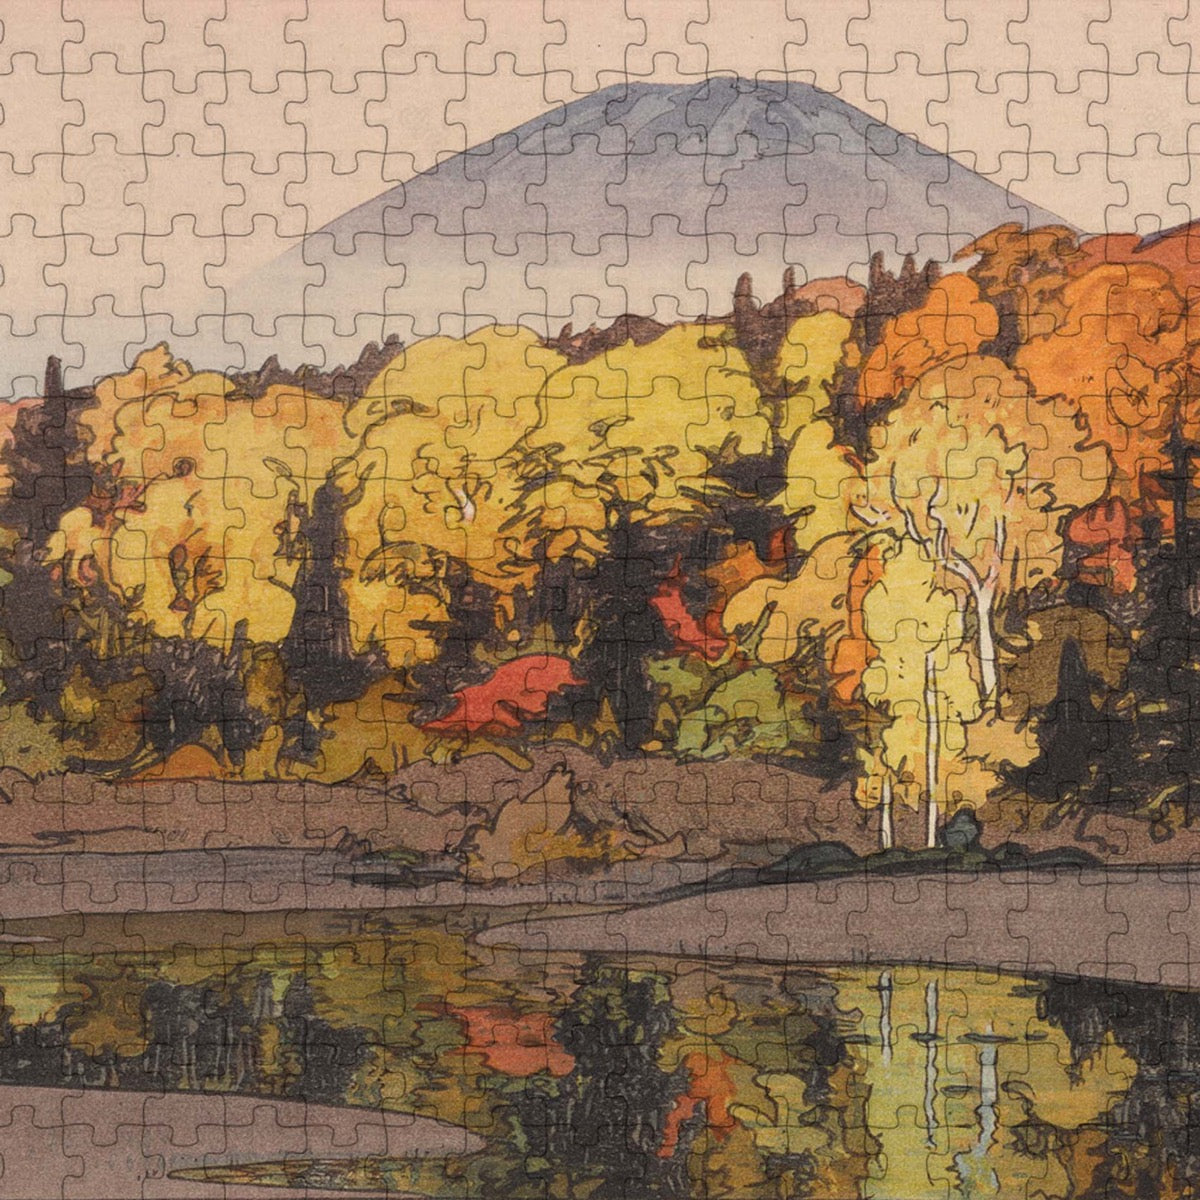 Suiren Marsh at Hakkōdasan 1929, 300 pc Puzzle